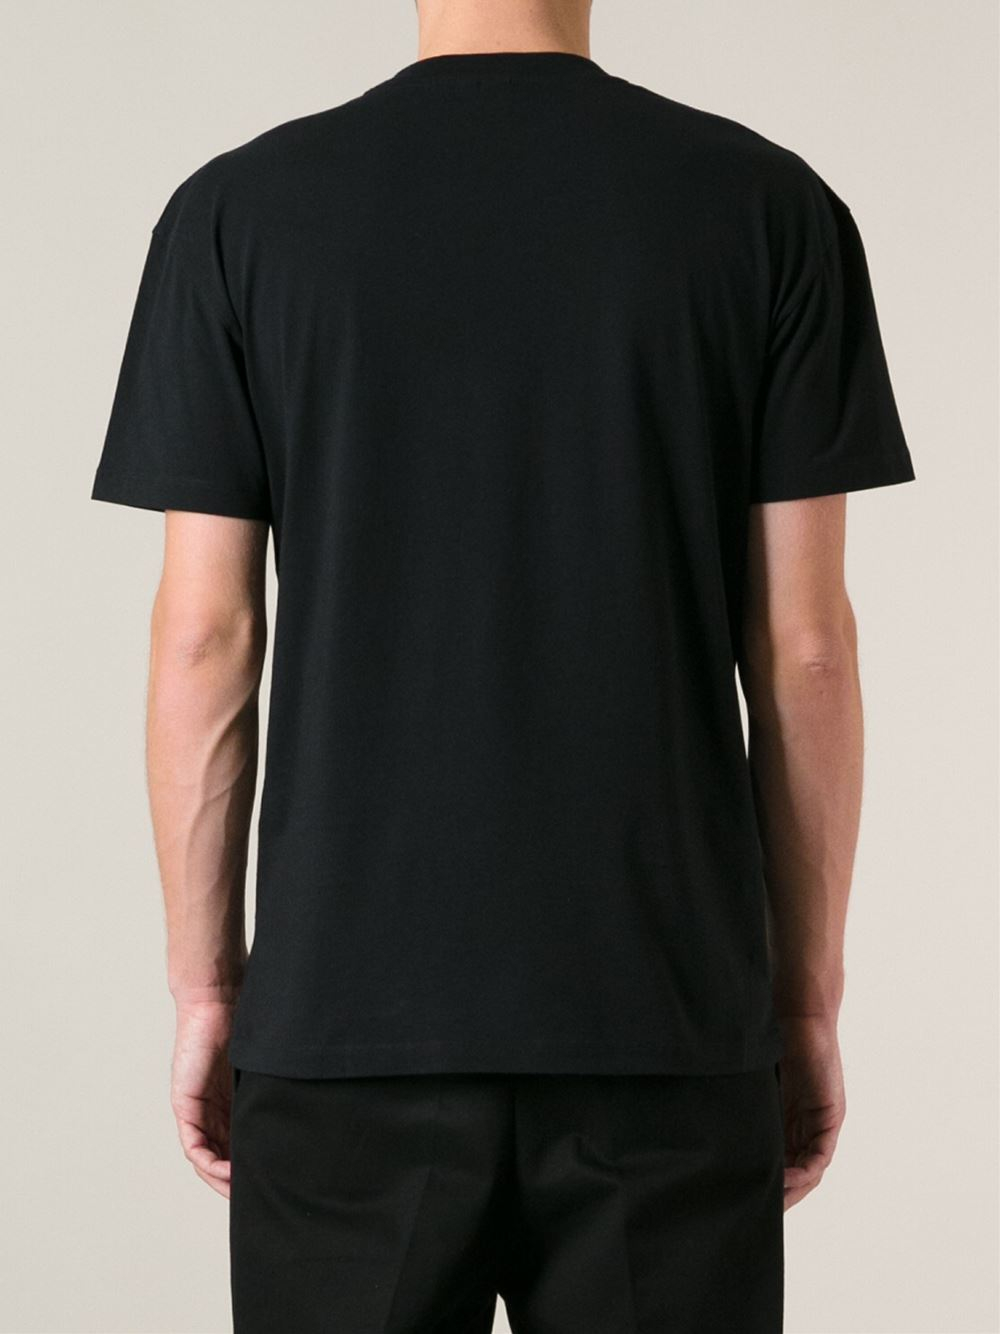 Lyst - Mcq Razor Blade Print T-Shirt in Black for Men